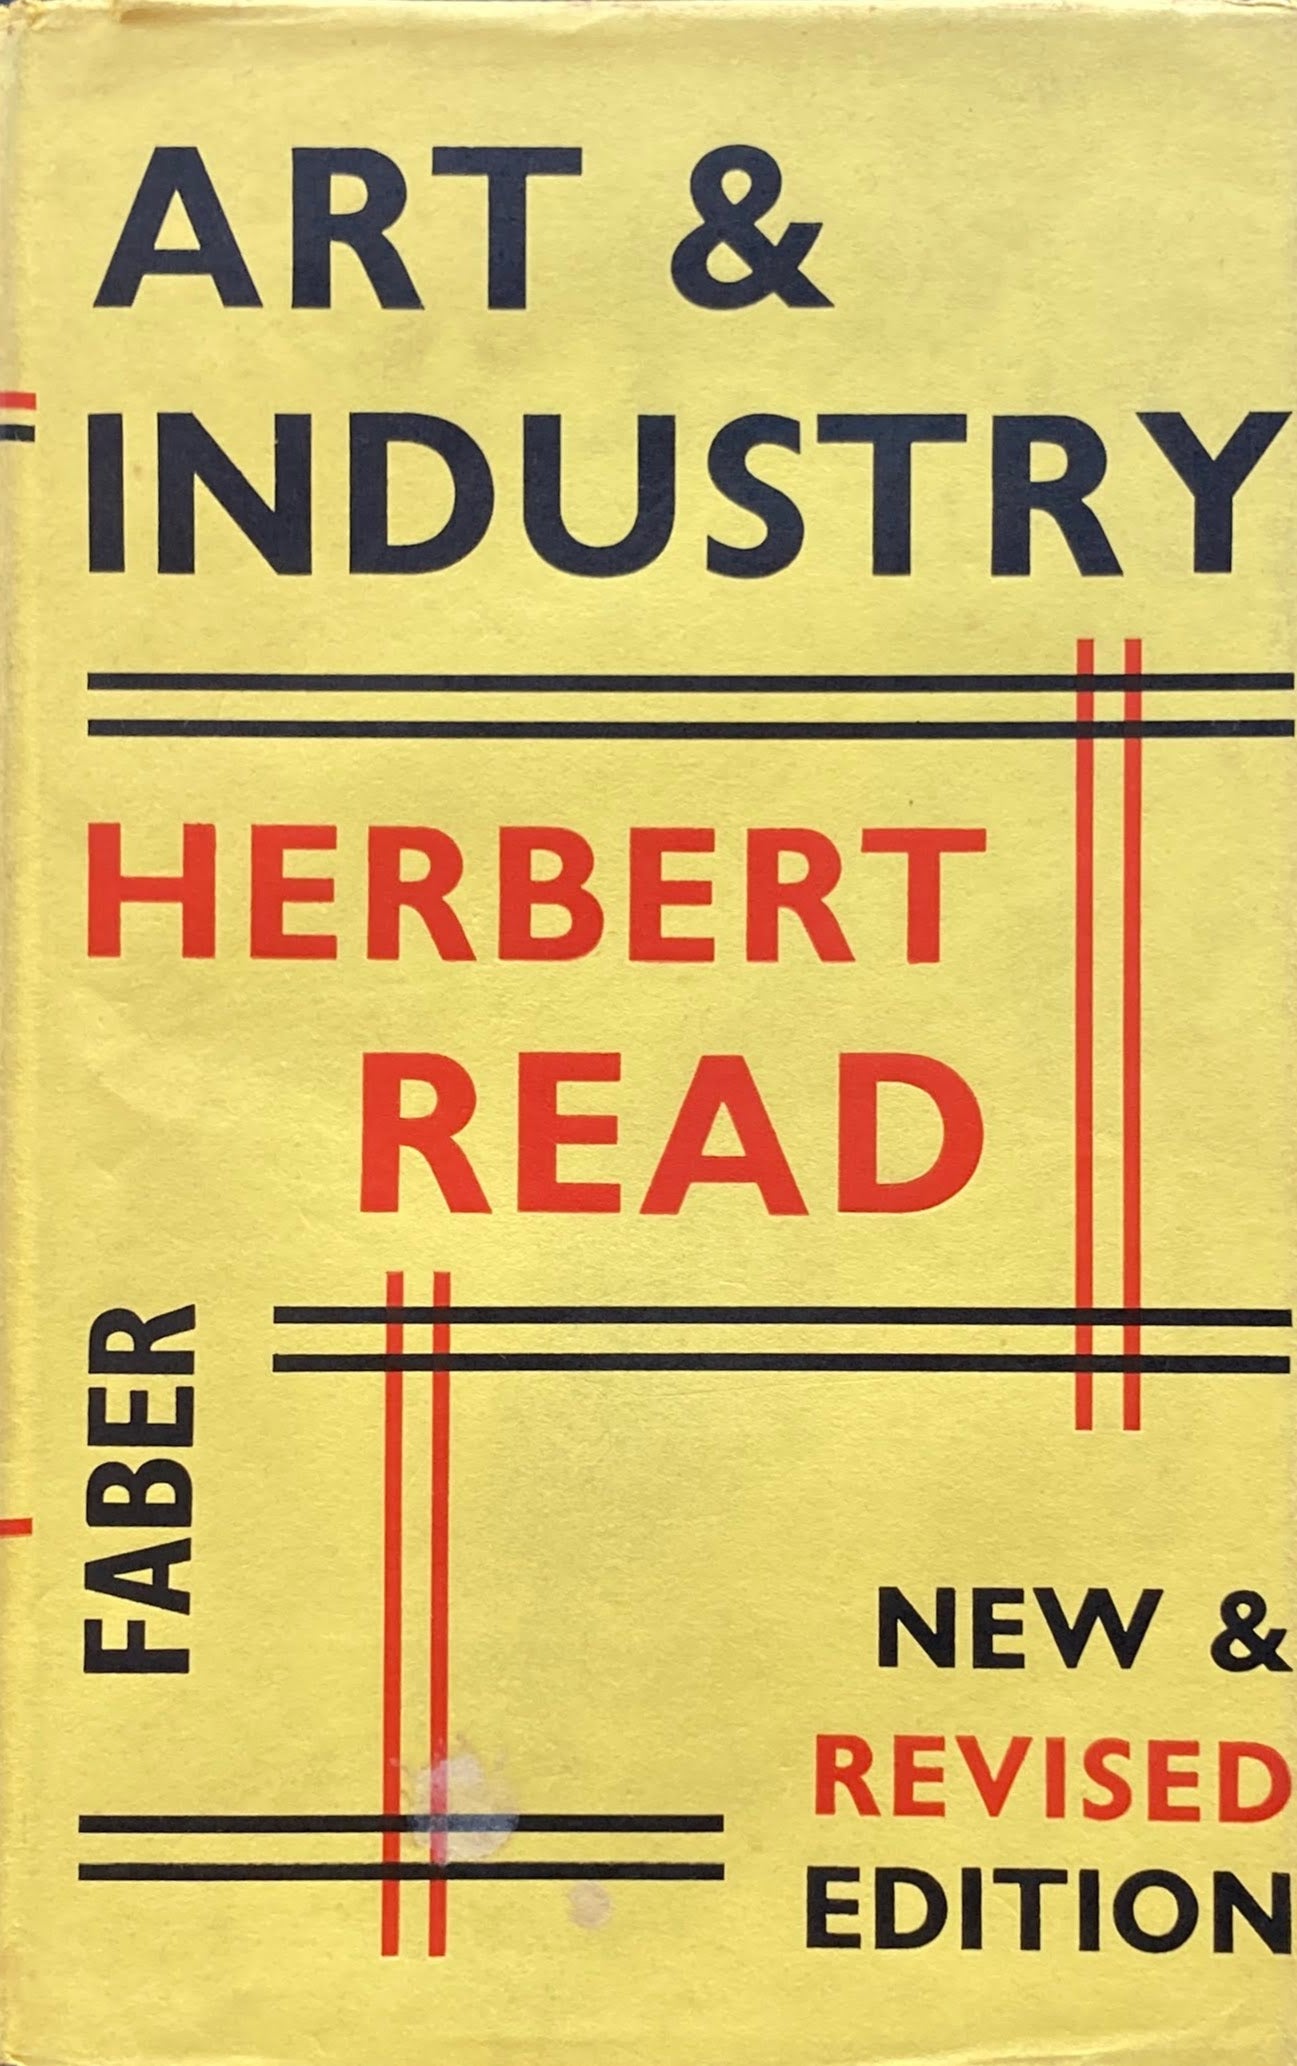 Art & Industry Herbert Read　New ＆Revised edition インダストリアル・デザイン　ハーバート・リード　